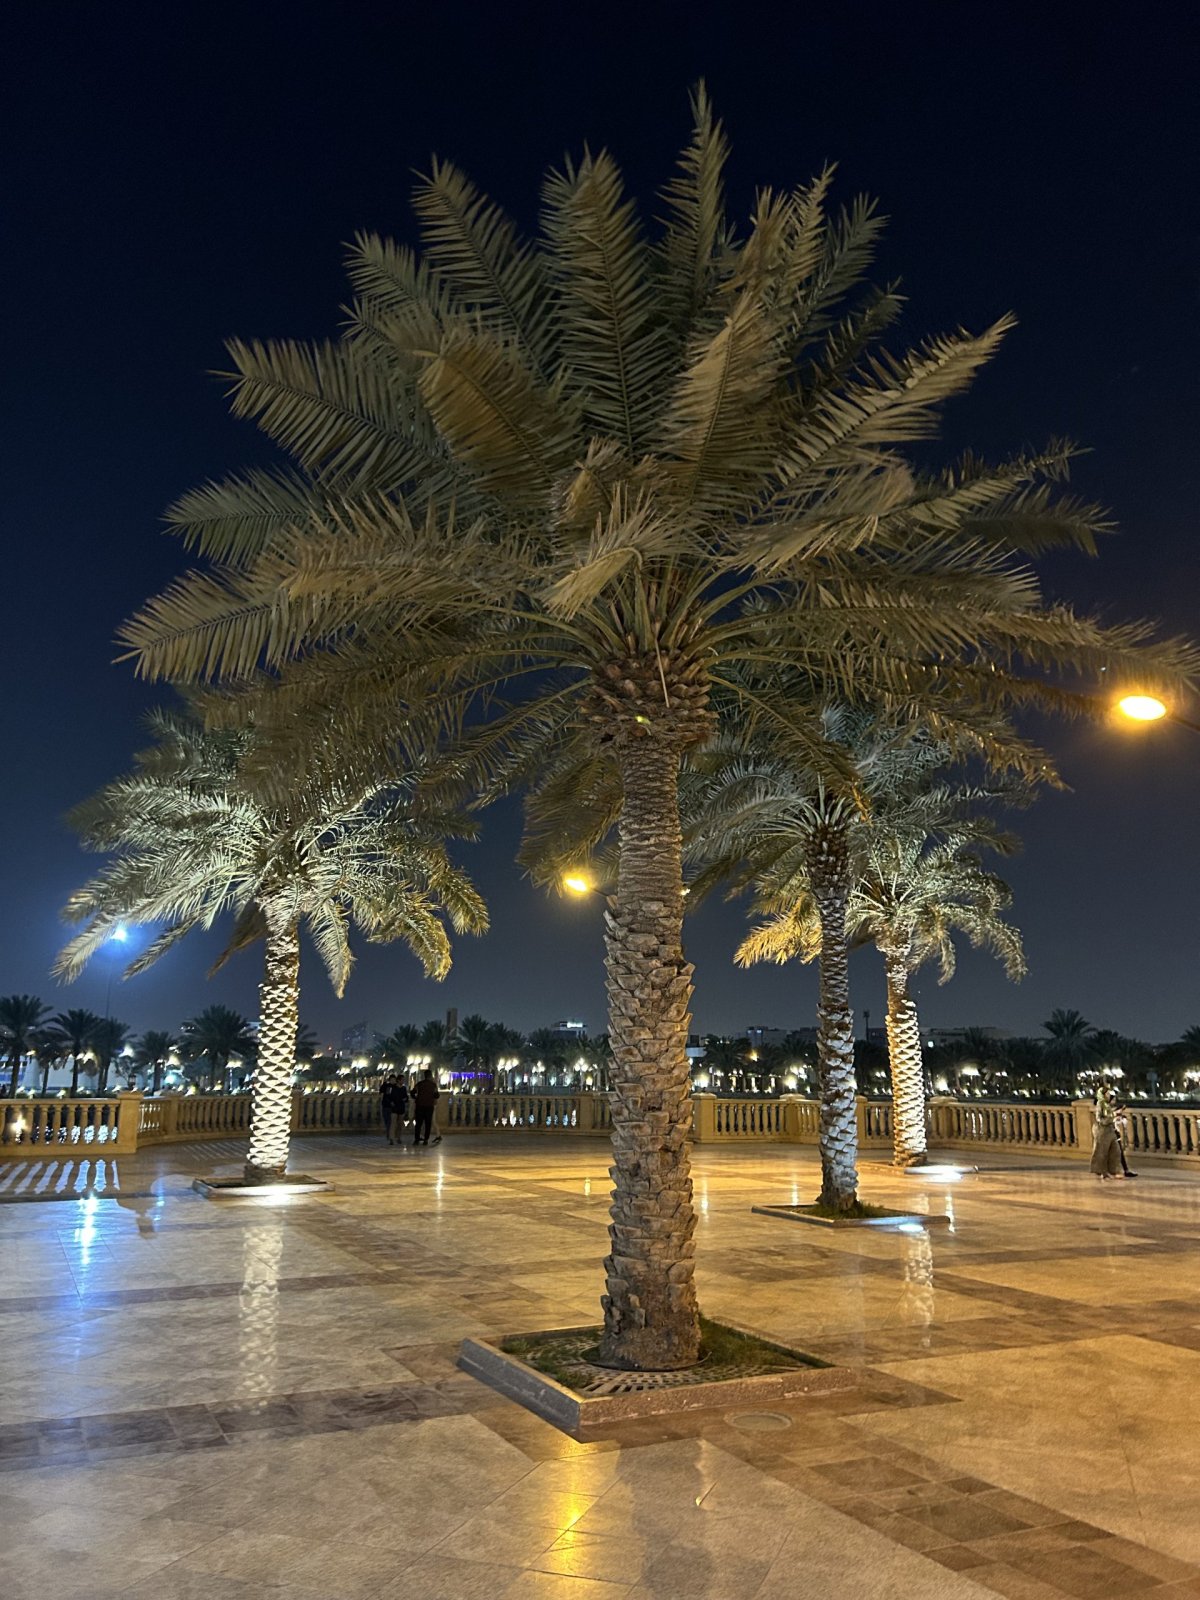 King Abdullah park